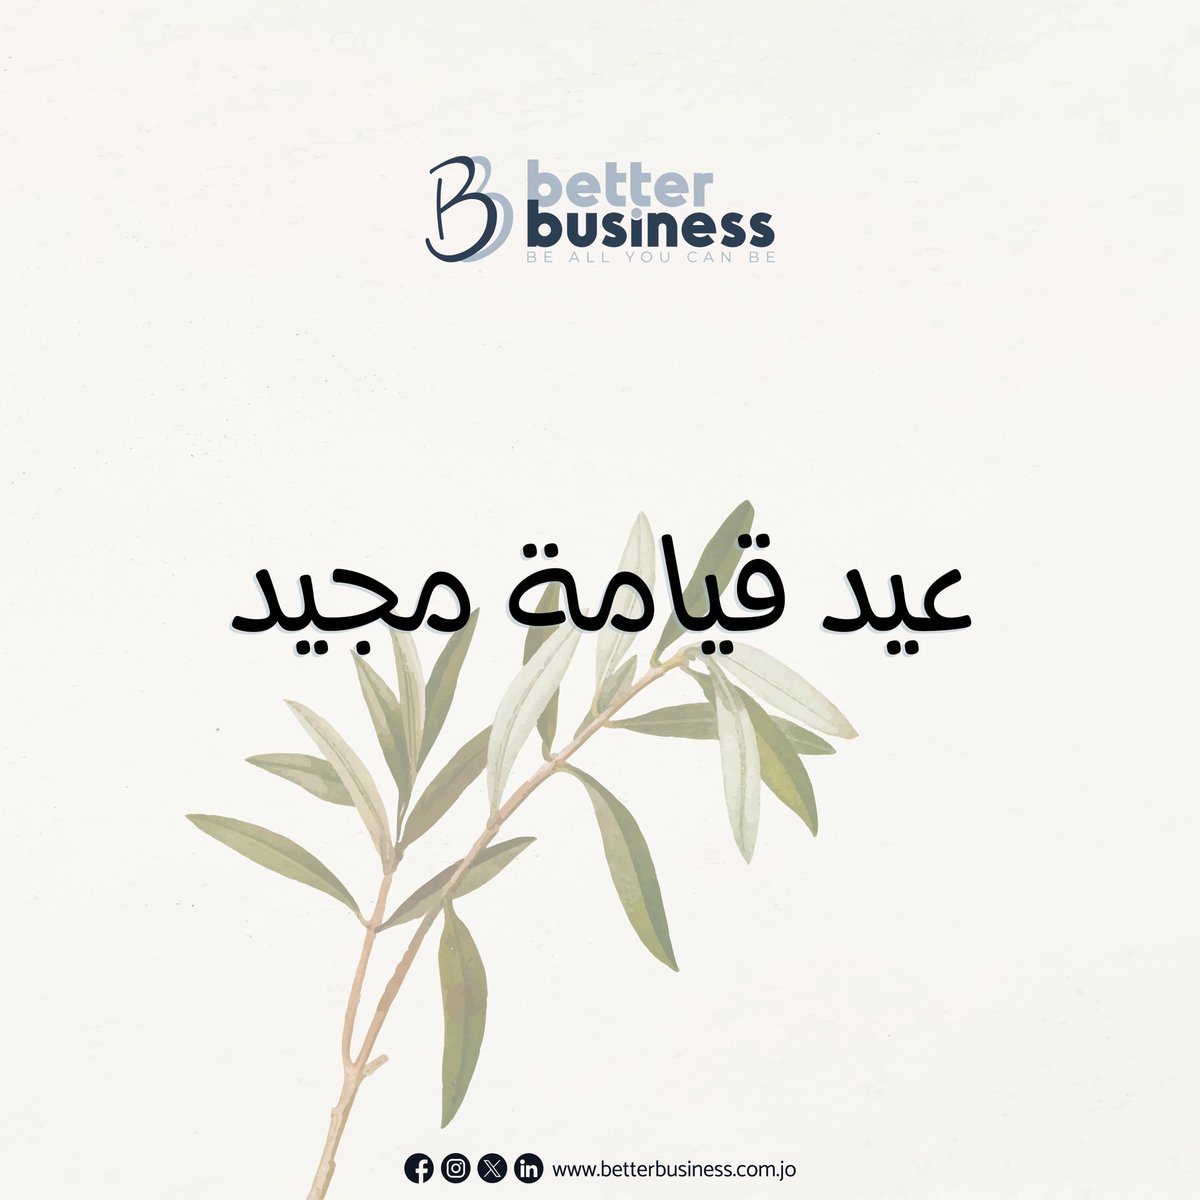 #BetterBusiness #Jordan #Amman